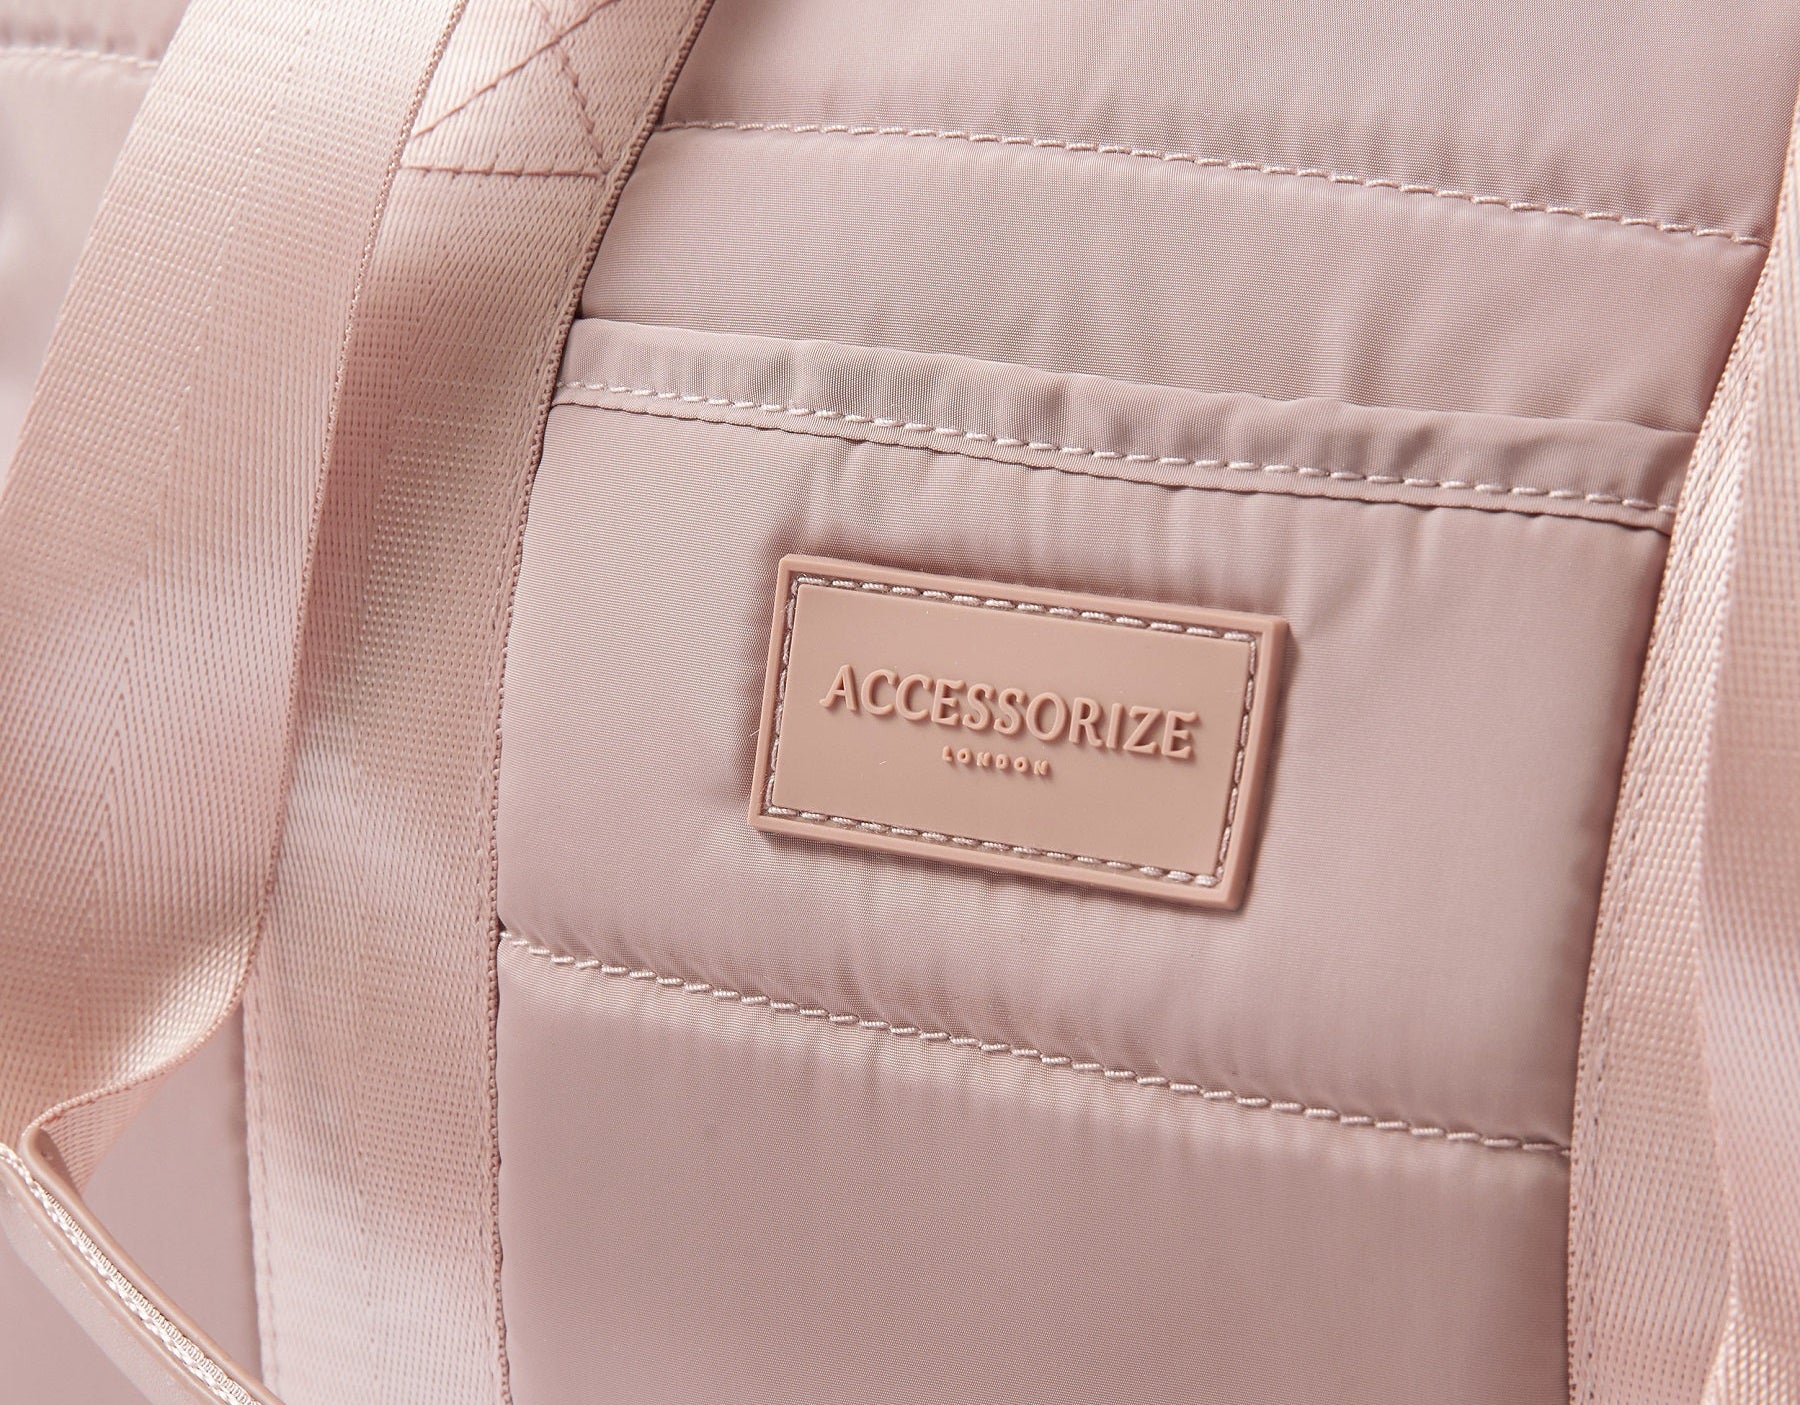 Accessorize London women's Pink Becki Gym Bag